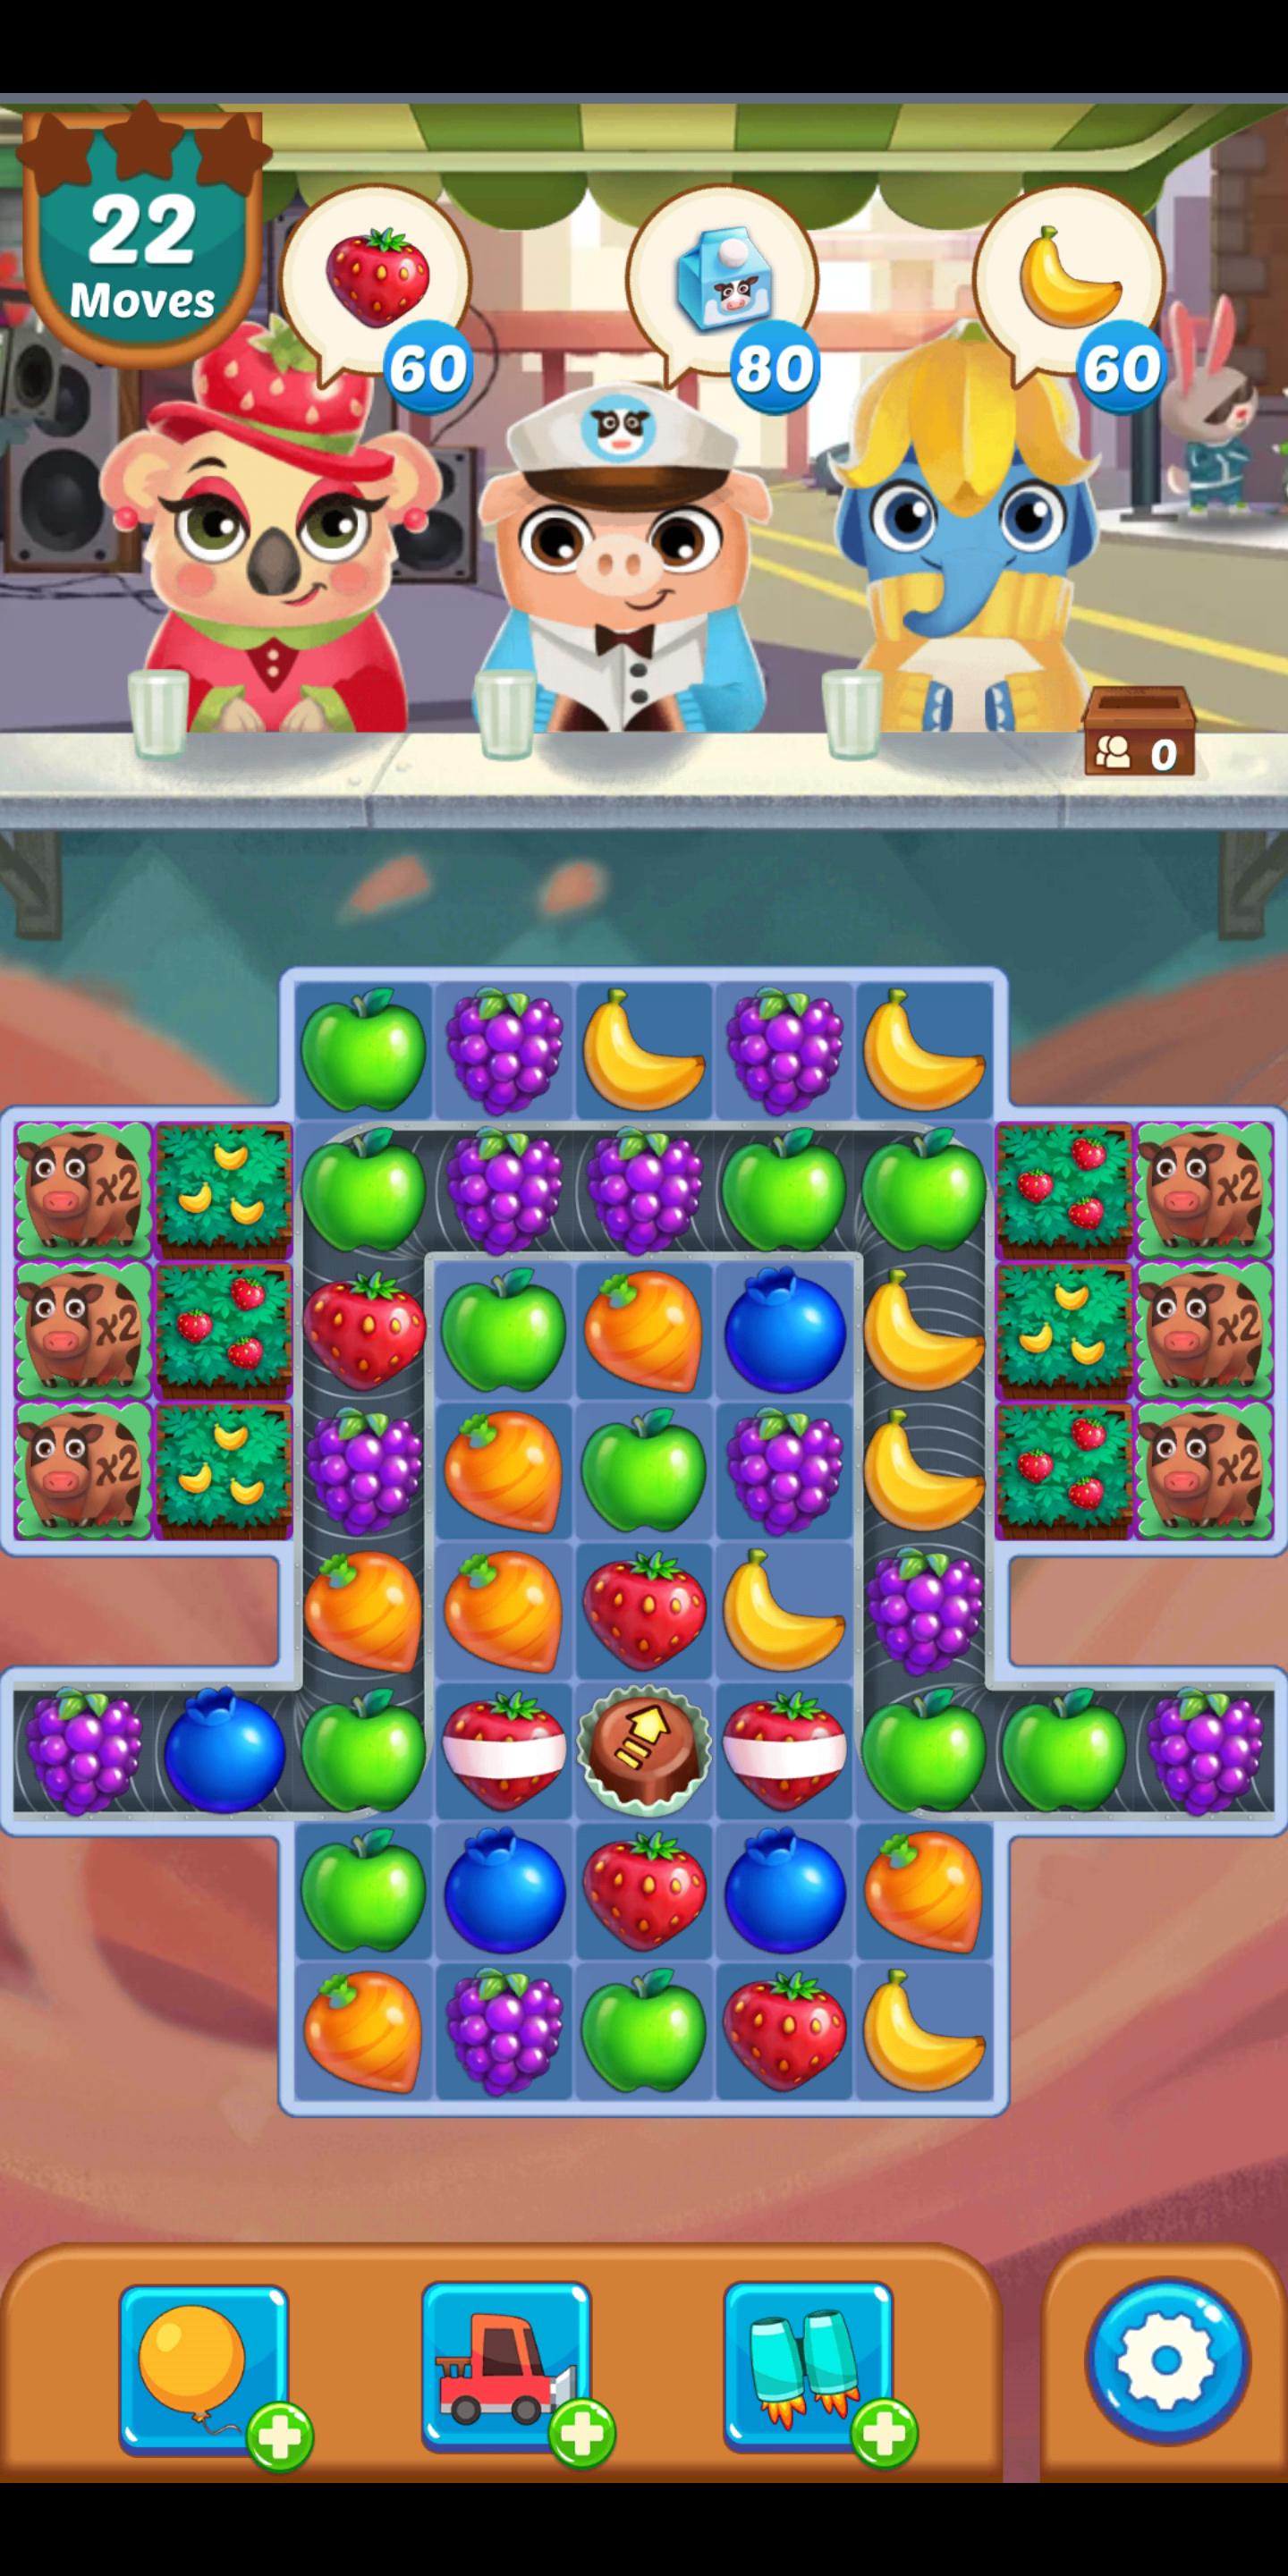 Juice Jam Puzzle Game & Free Match 3 Games 3.0.5 Screenshot 16